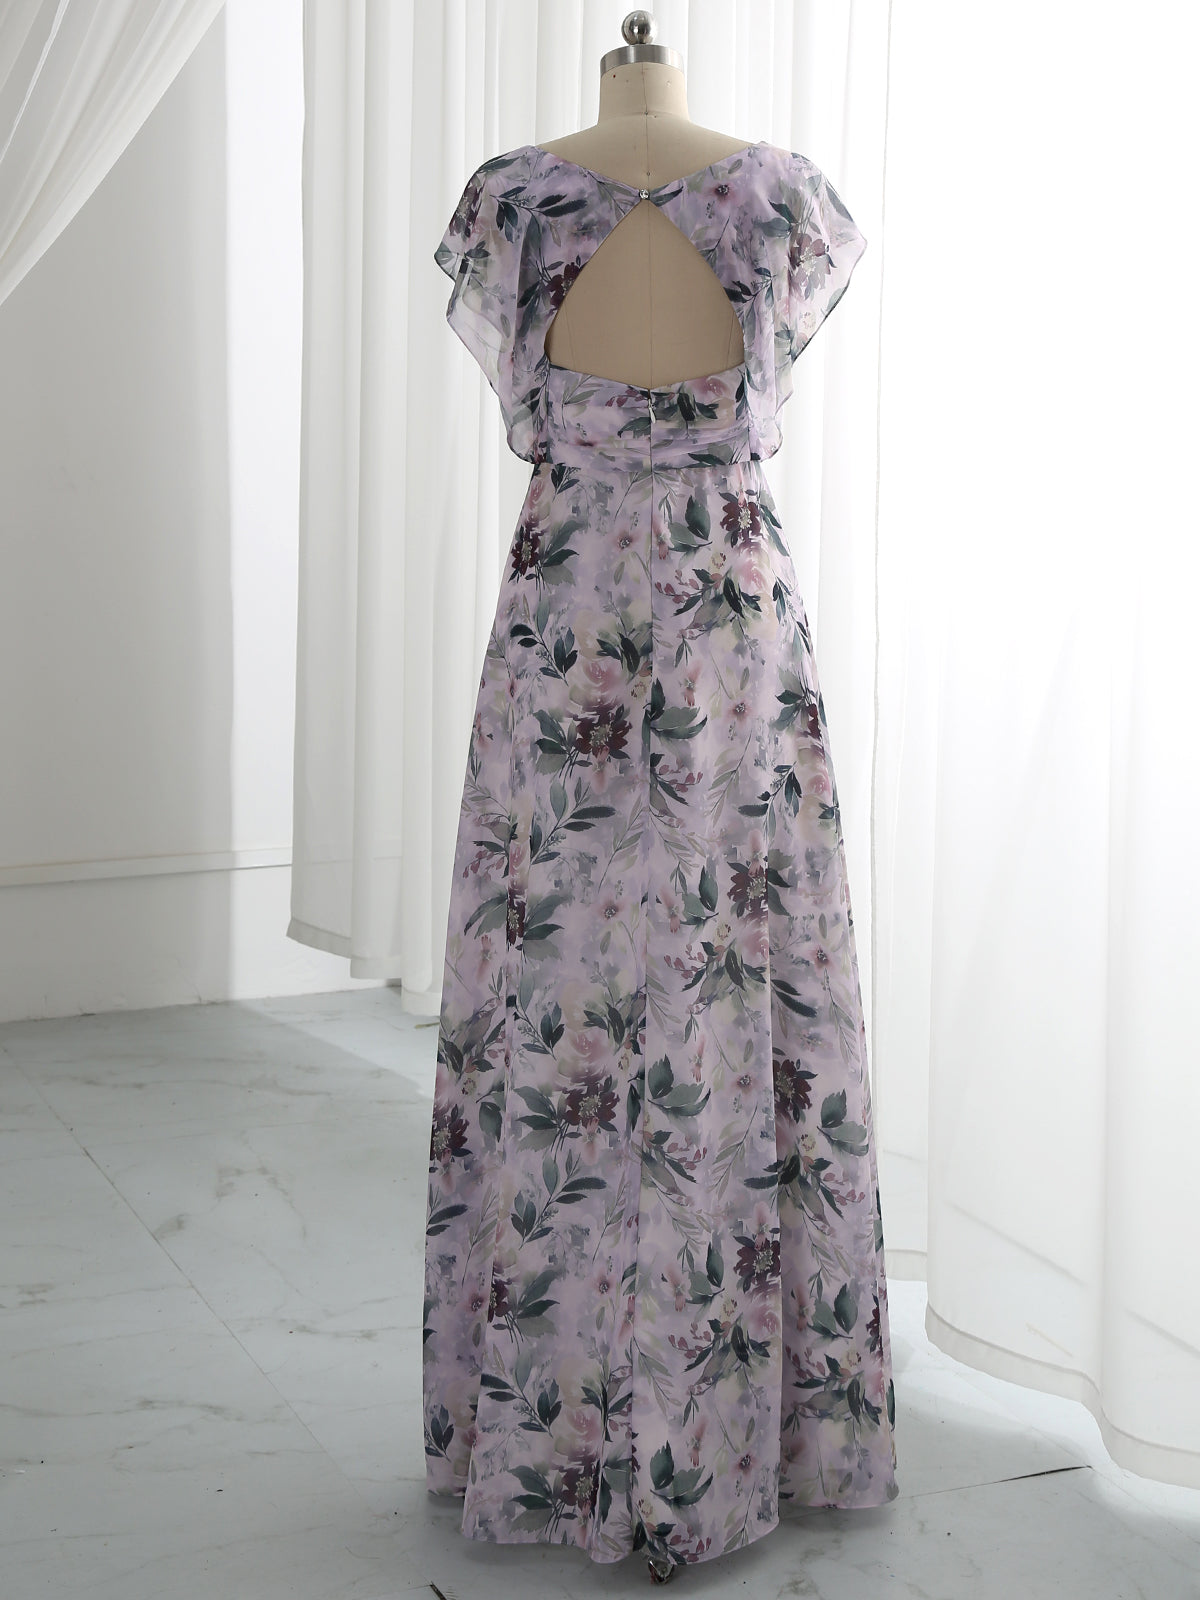 MissJophiel Bat Sleeves V Neck Floral Chiffon Wisteria Prom Dress Wedding Guest Evening Gown